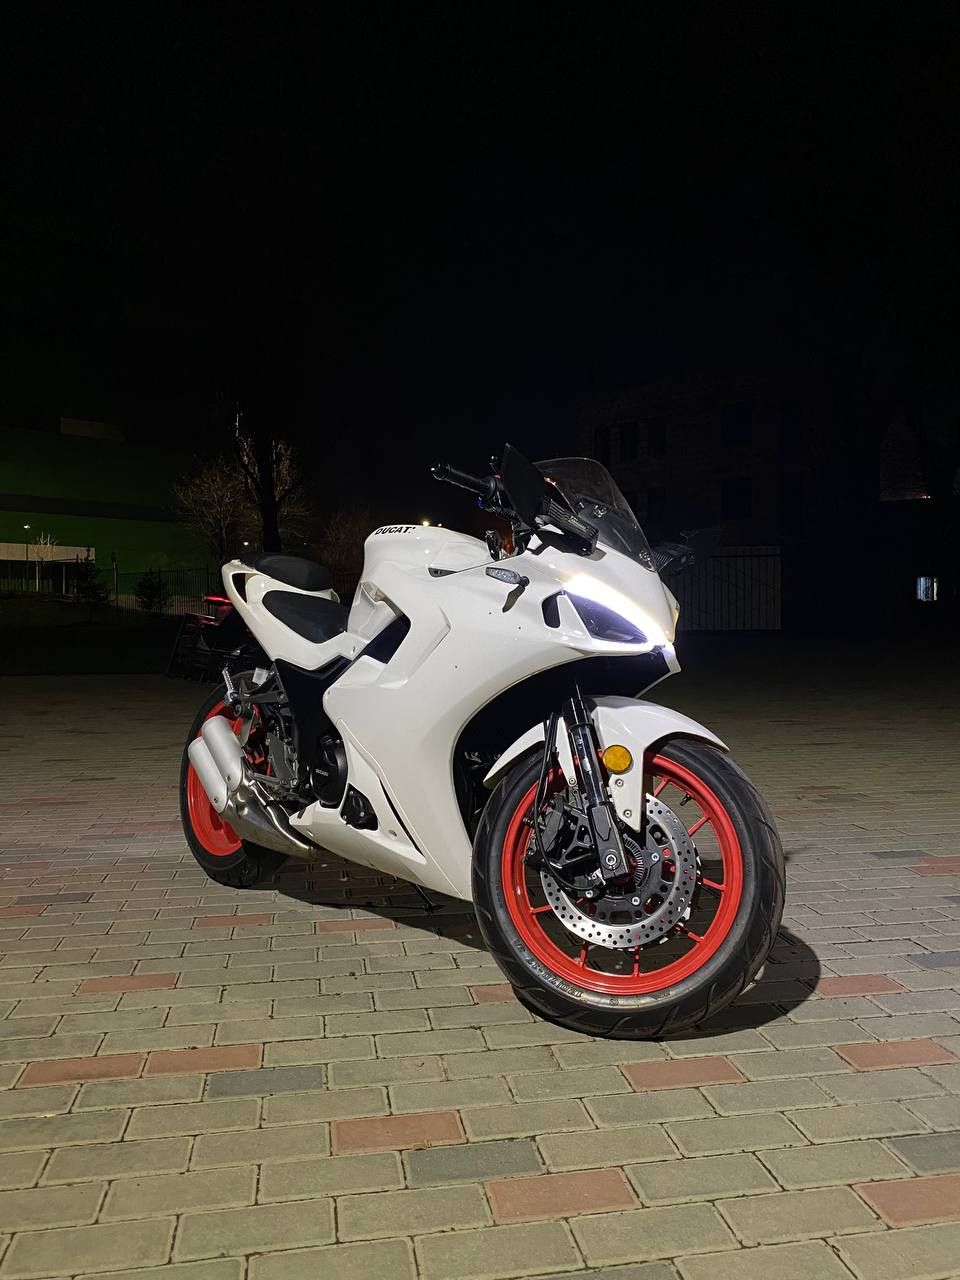 Ducati 950 sport